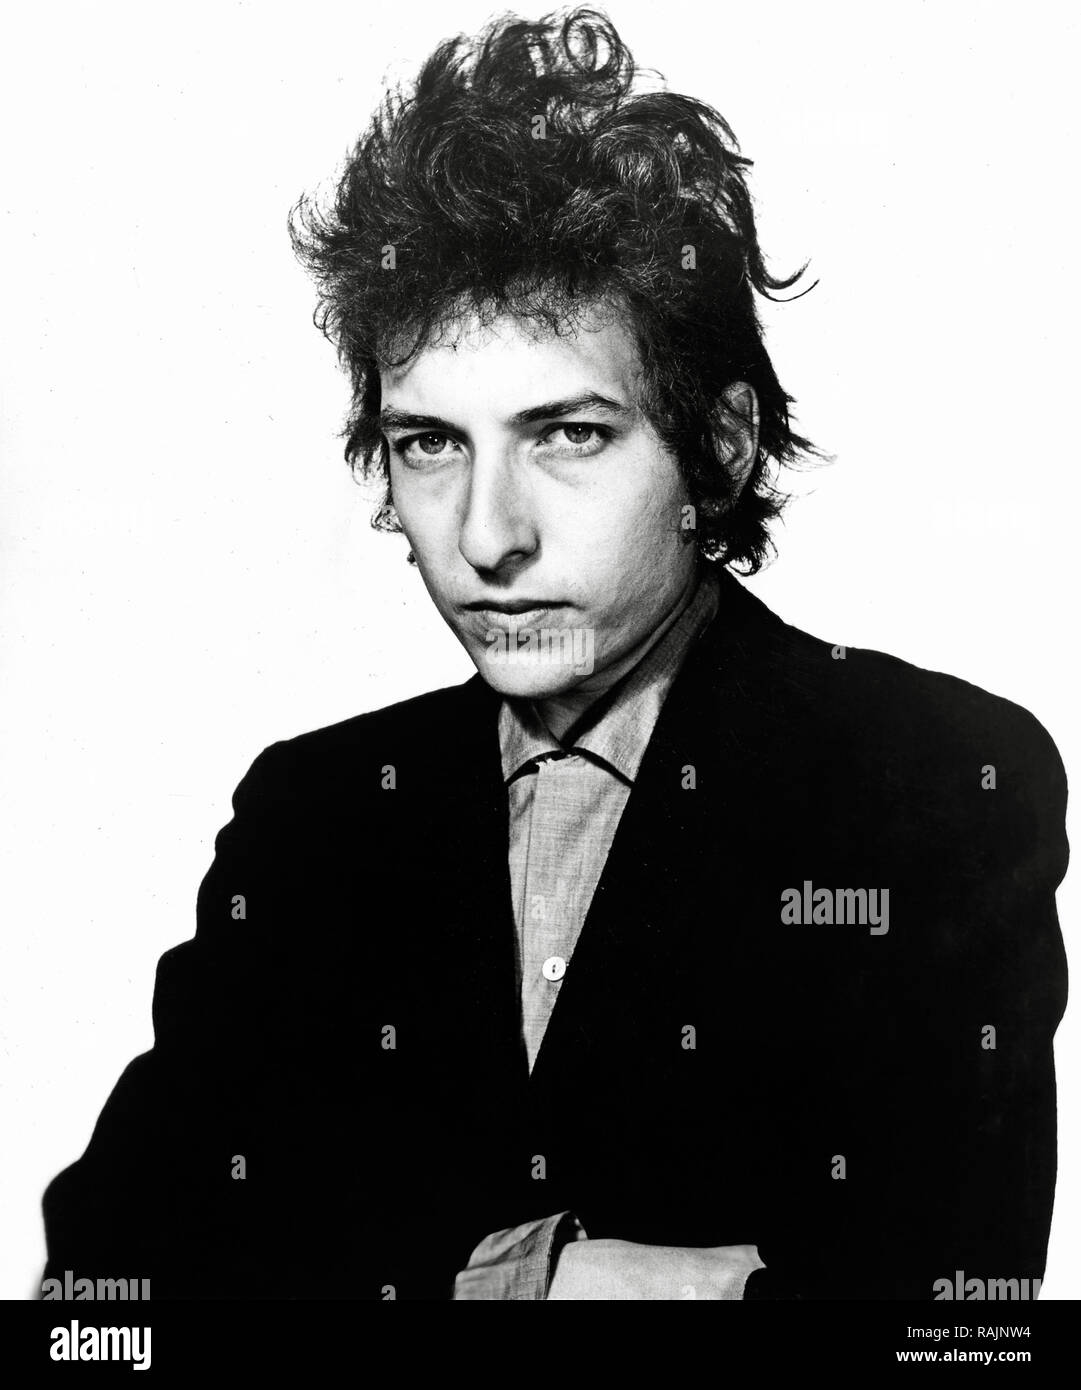 Bob Dylan 1960s